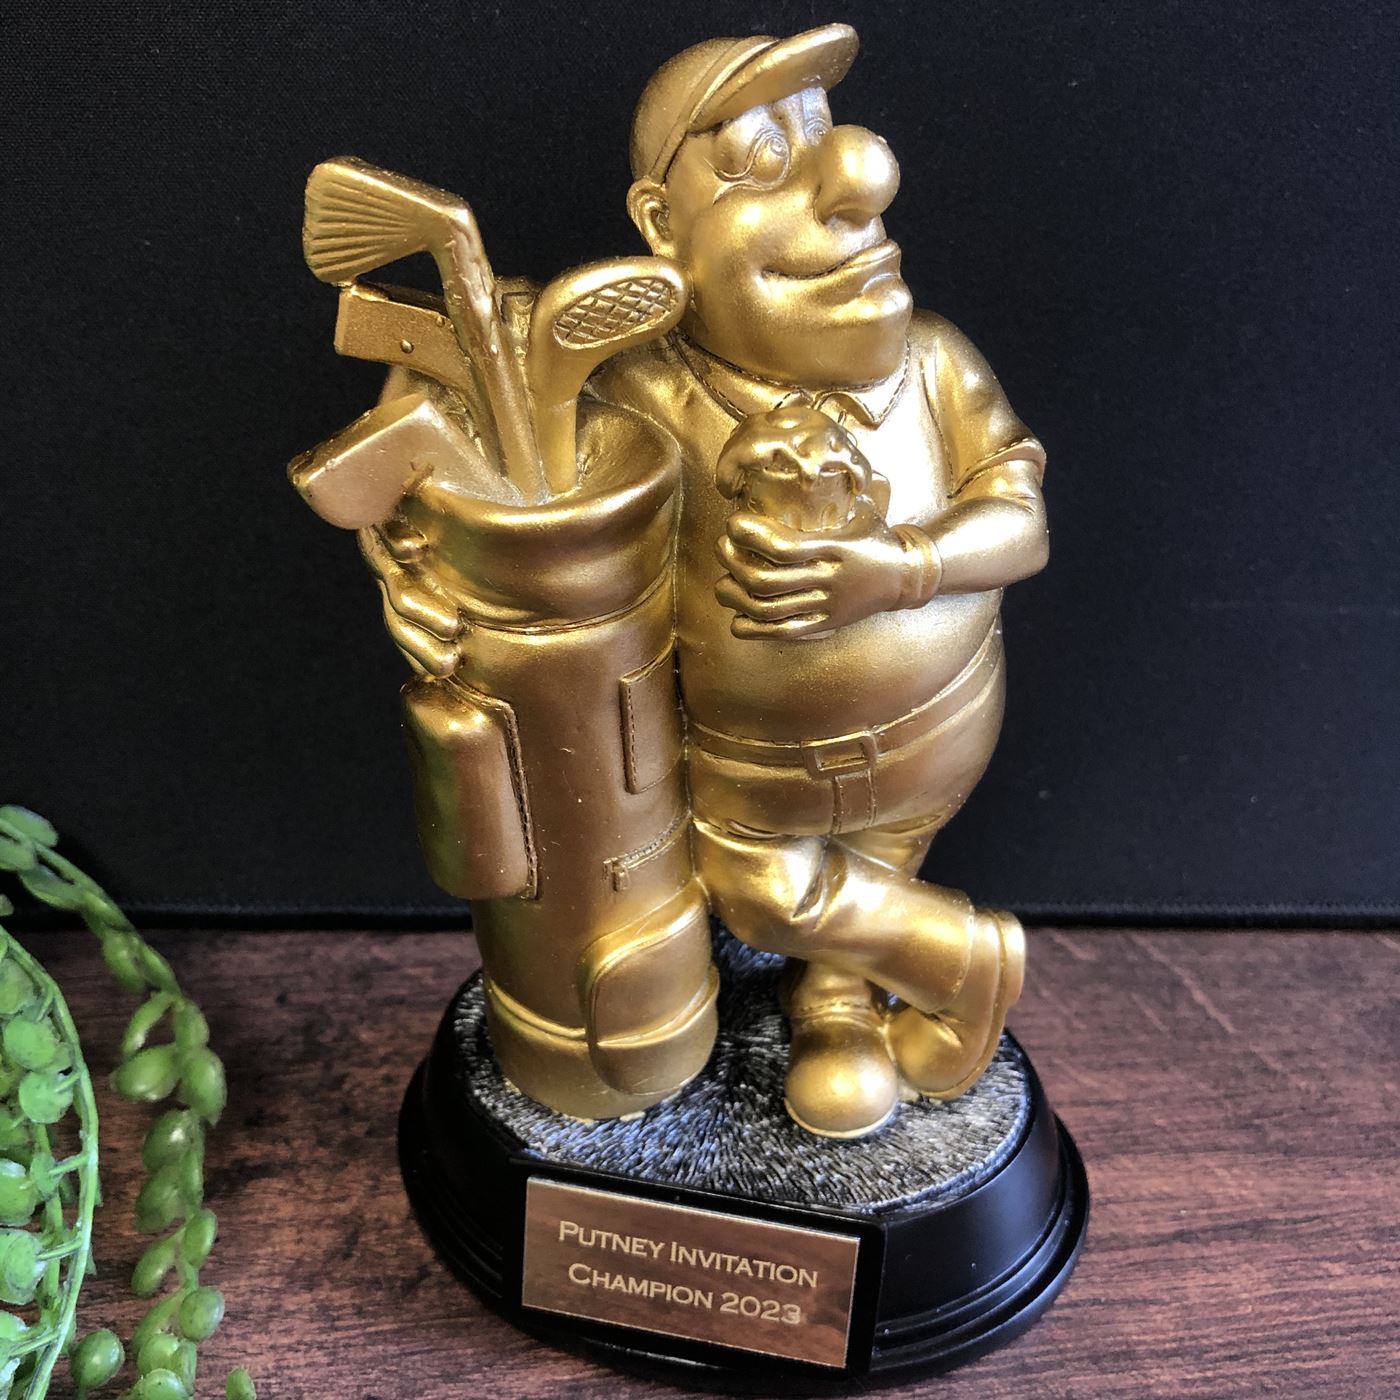 Comedy Beer Belly Golf Award Trophy